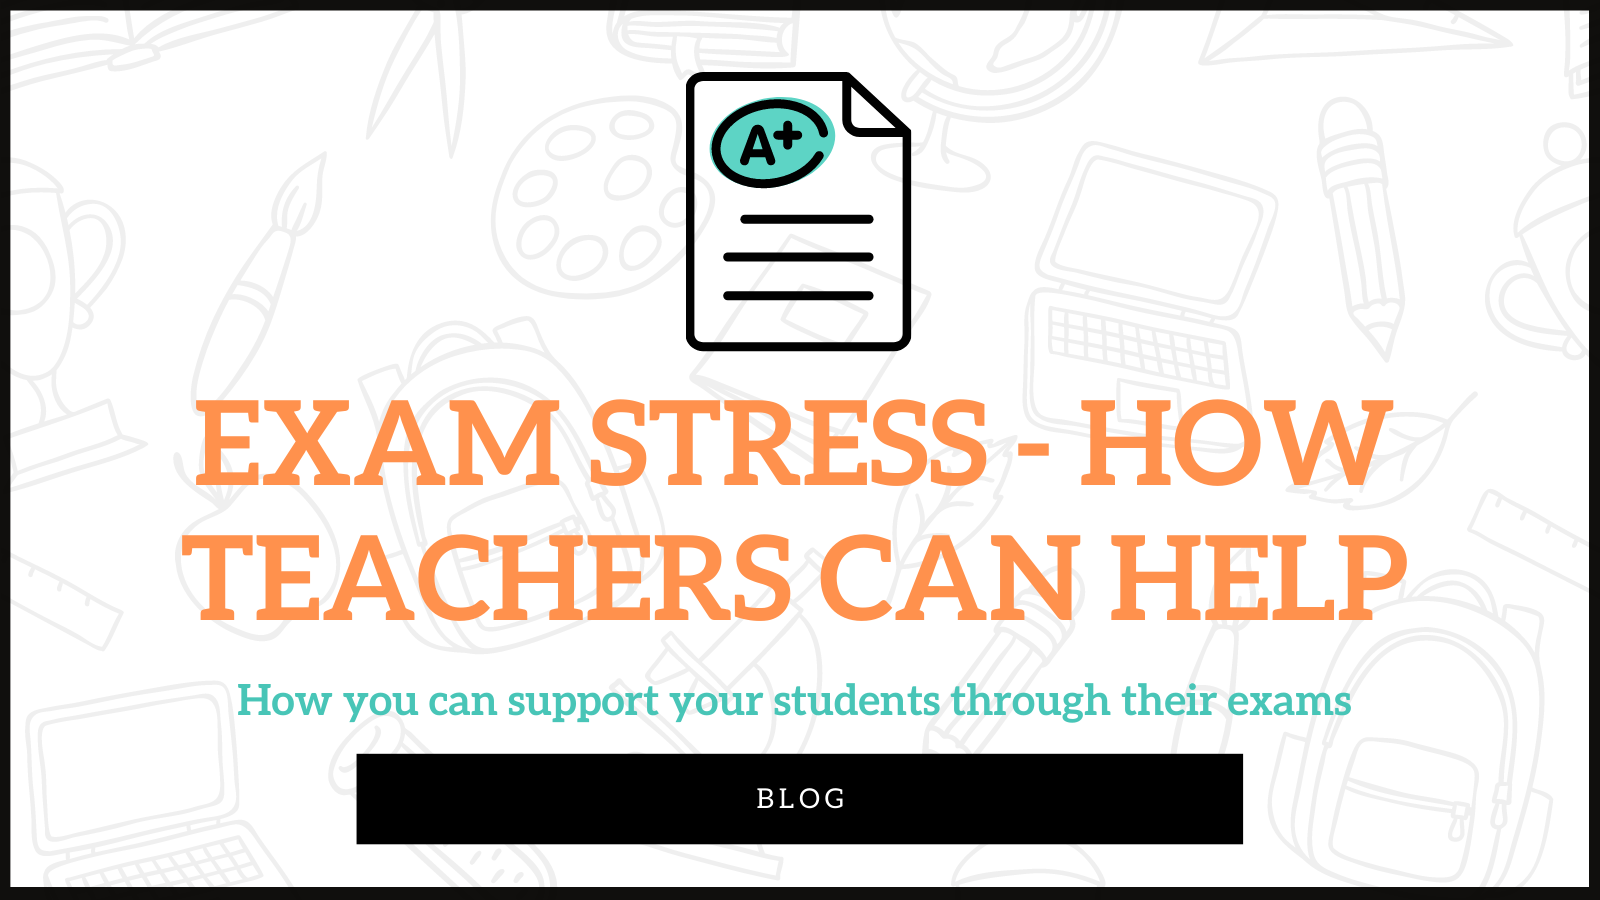 Exam stress - how teachers can help